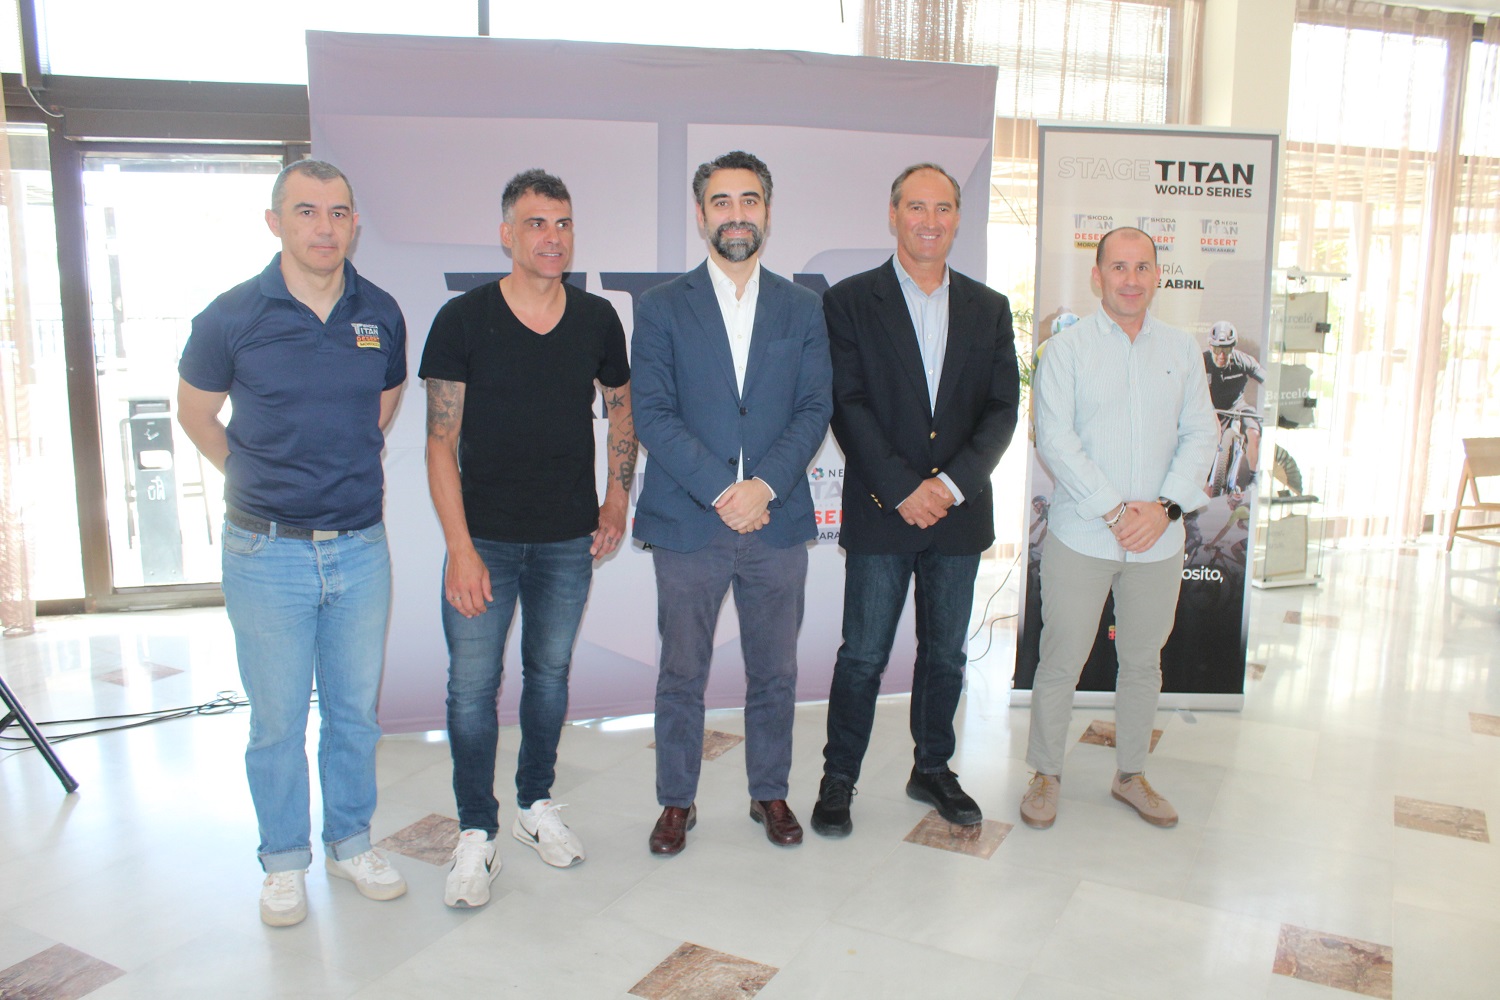 Presentacion Titan World Series 13 - Turismo Almería